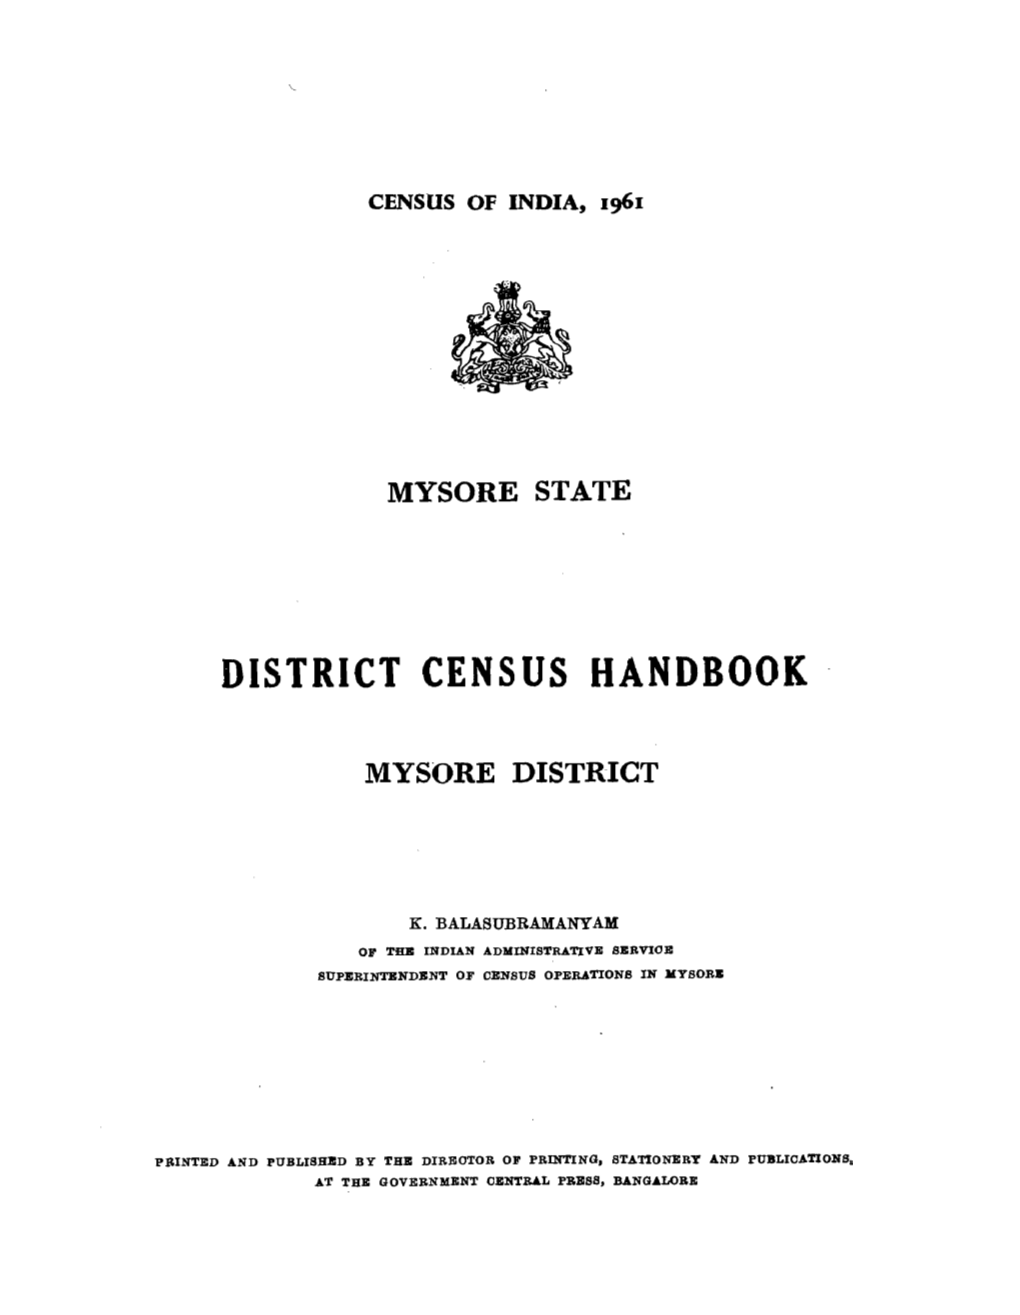 District Census Handbook, Mysore